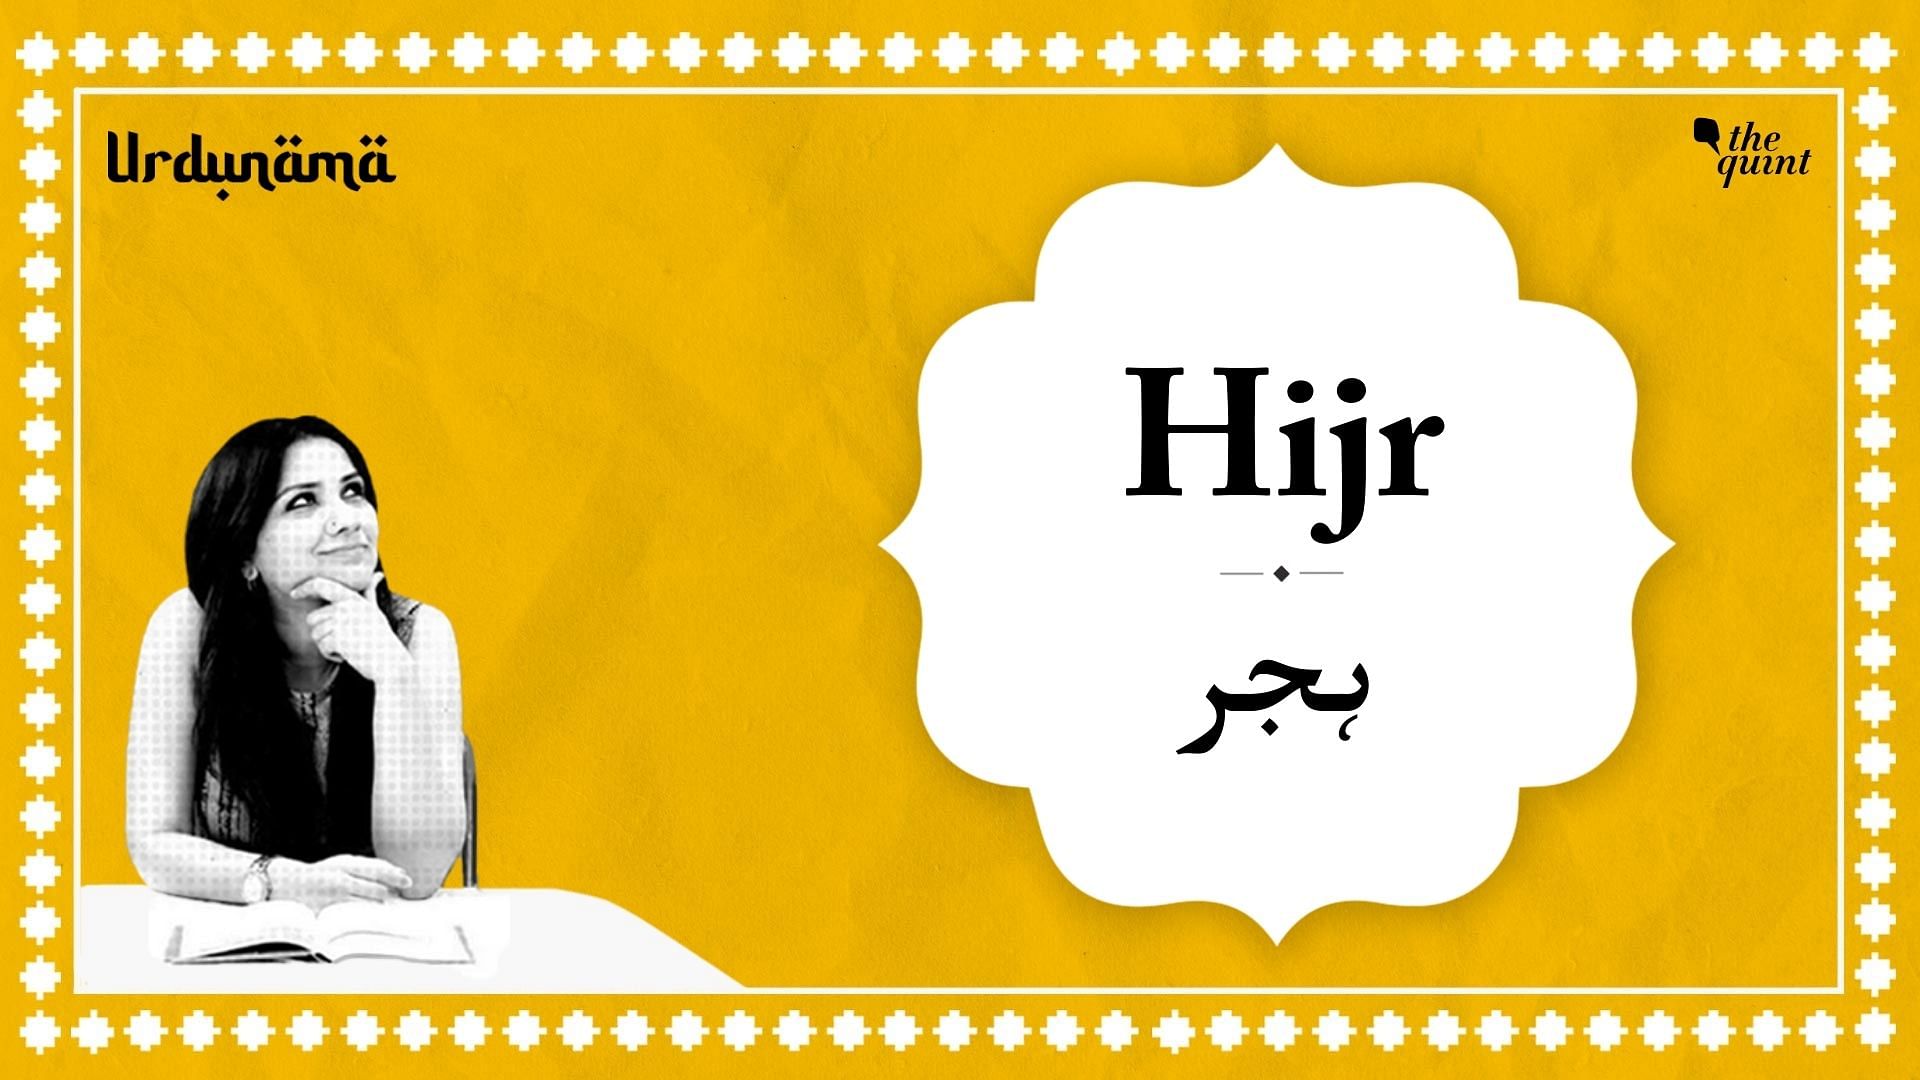 <div class="paragraphs"><p>Urdunama episode on the Stages of Love Part 3: 'Hijr'</p></div>